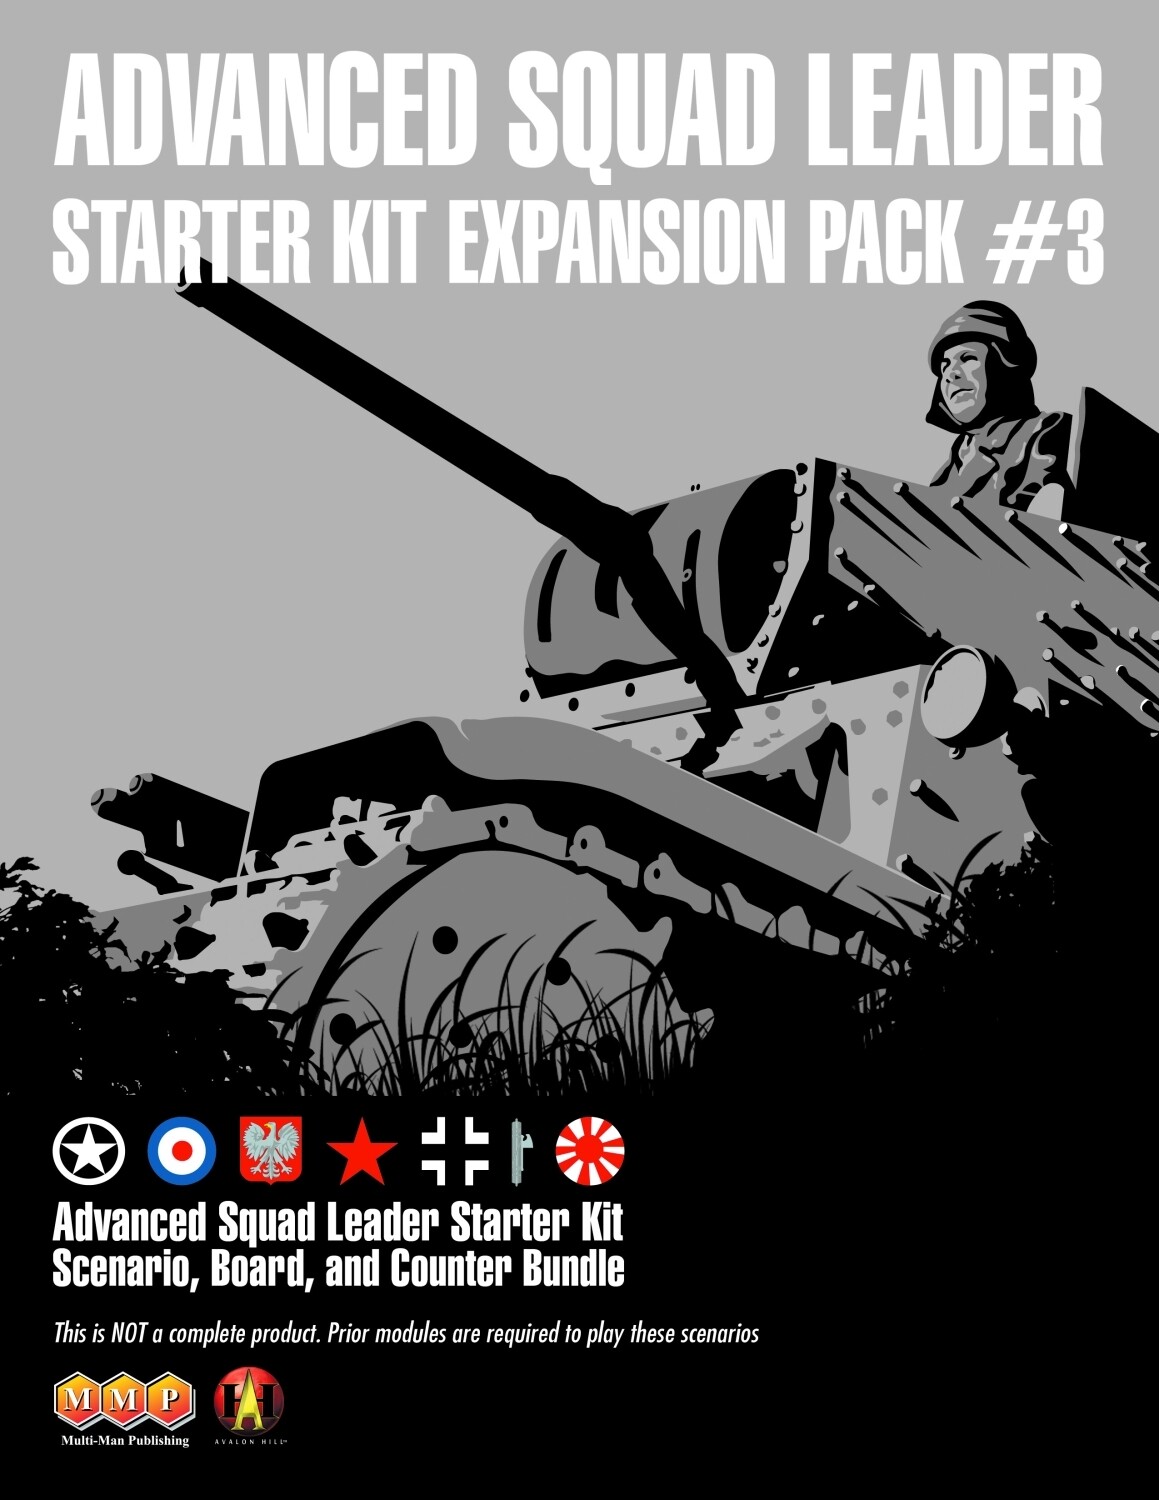 Advanced Squad Leader: Starter Kit Expansion Pack #3